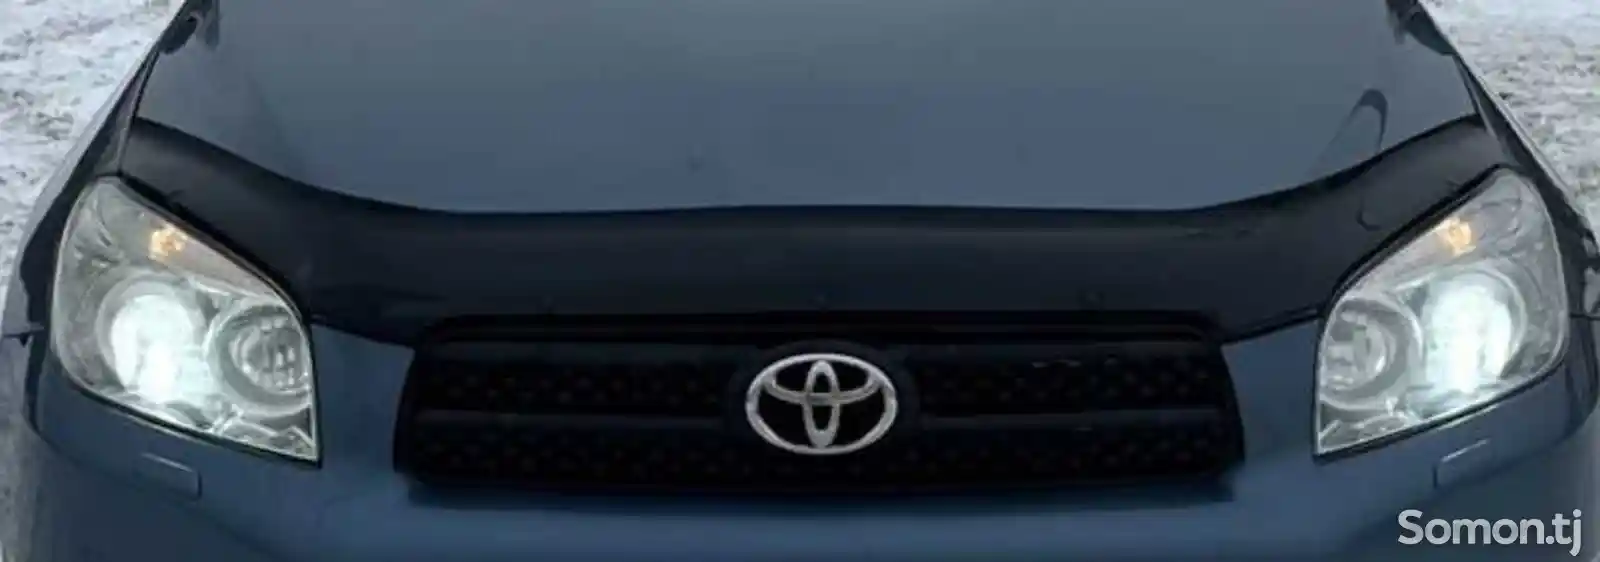 Спойлер на капот Toyota Rav 4 2006-2009-1